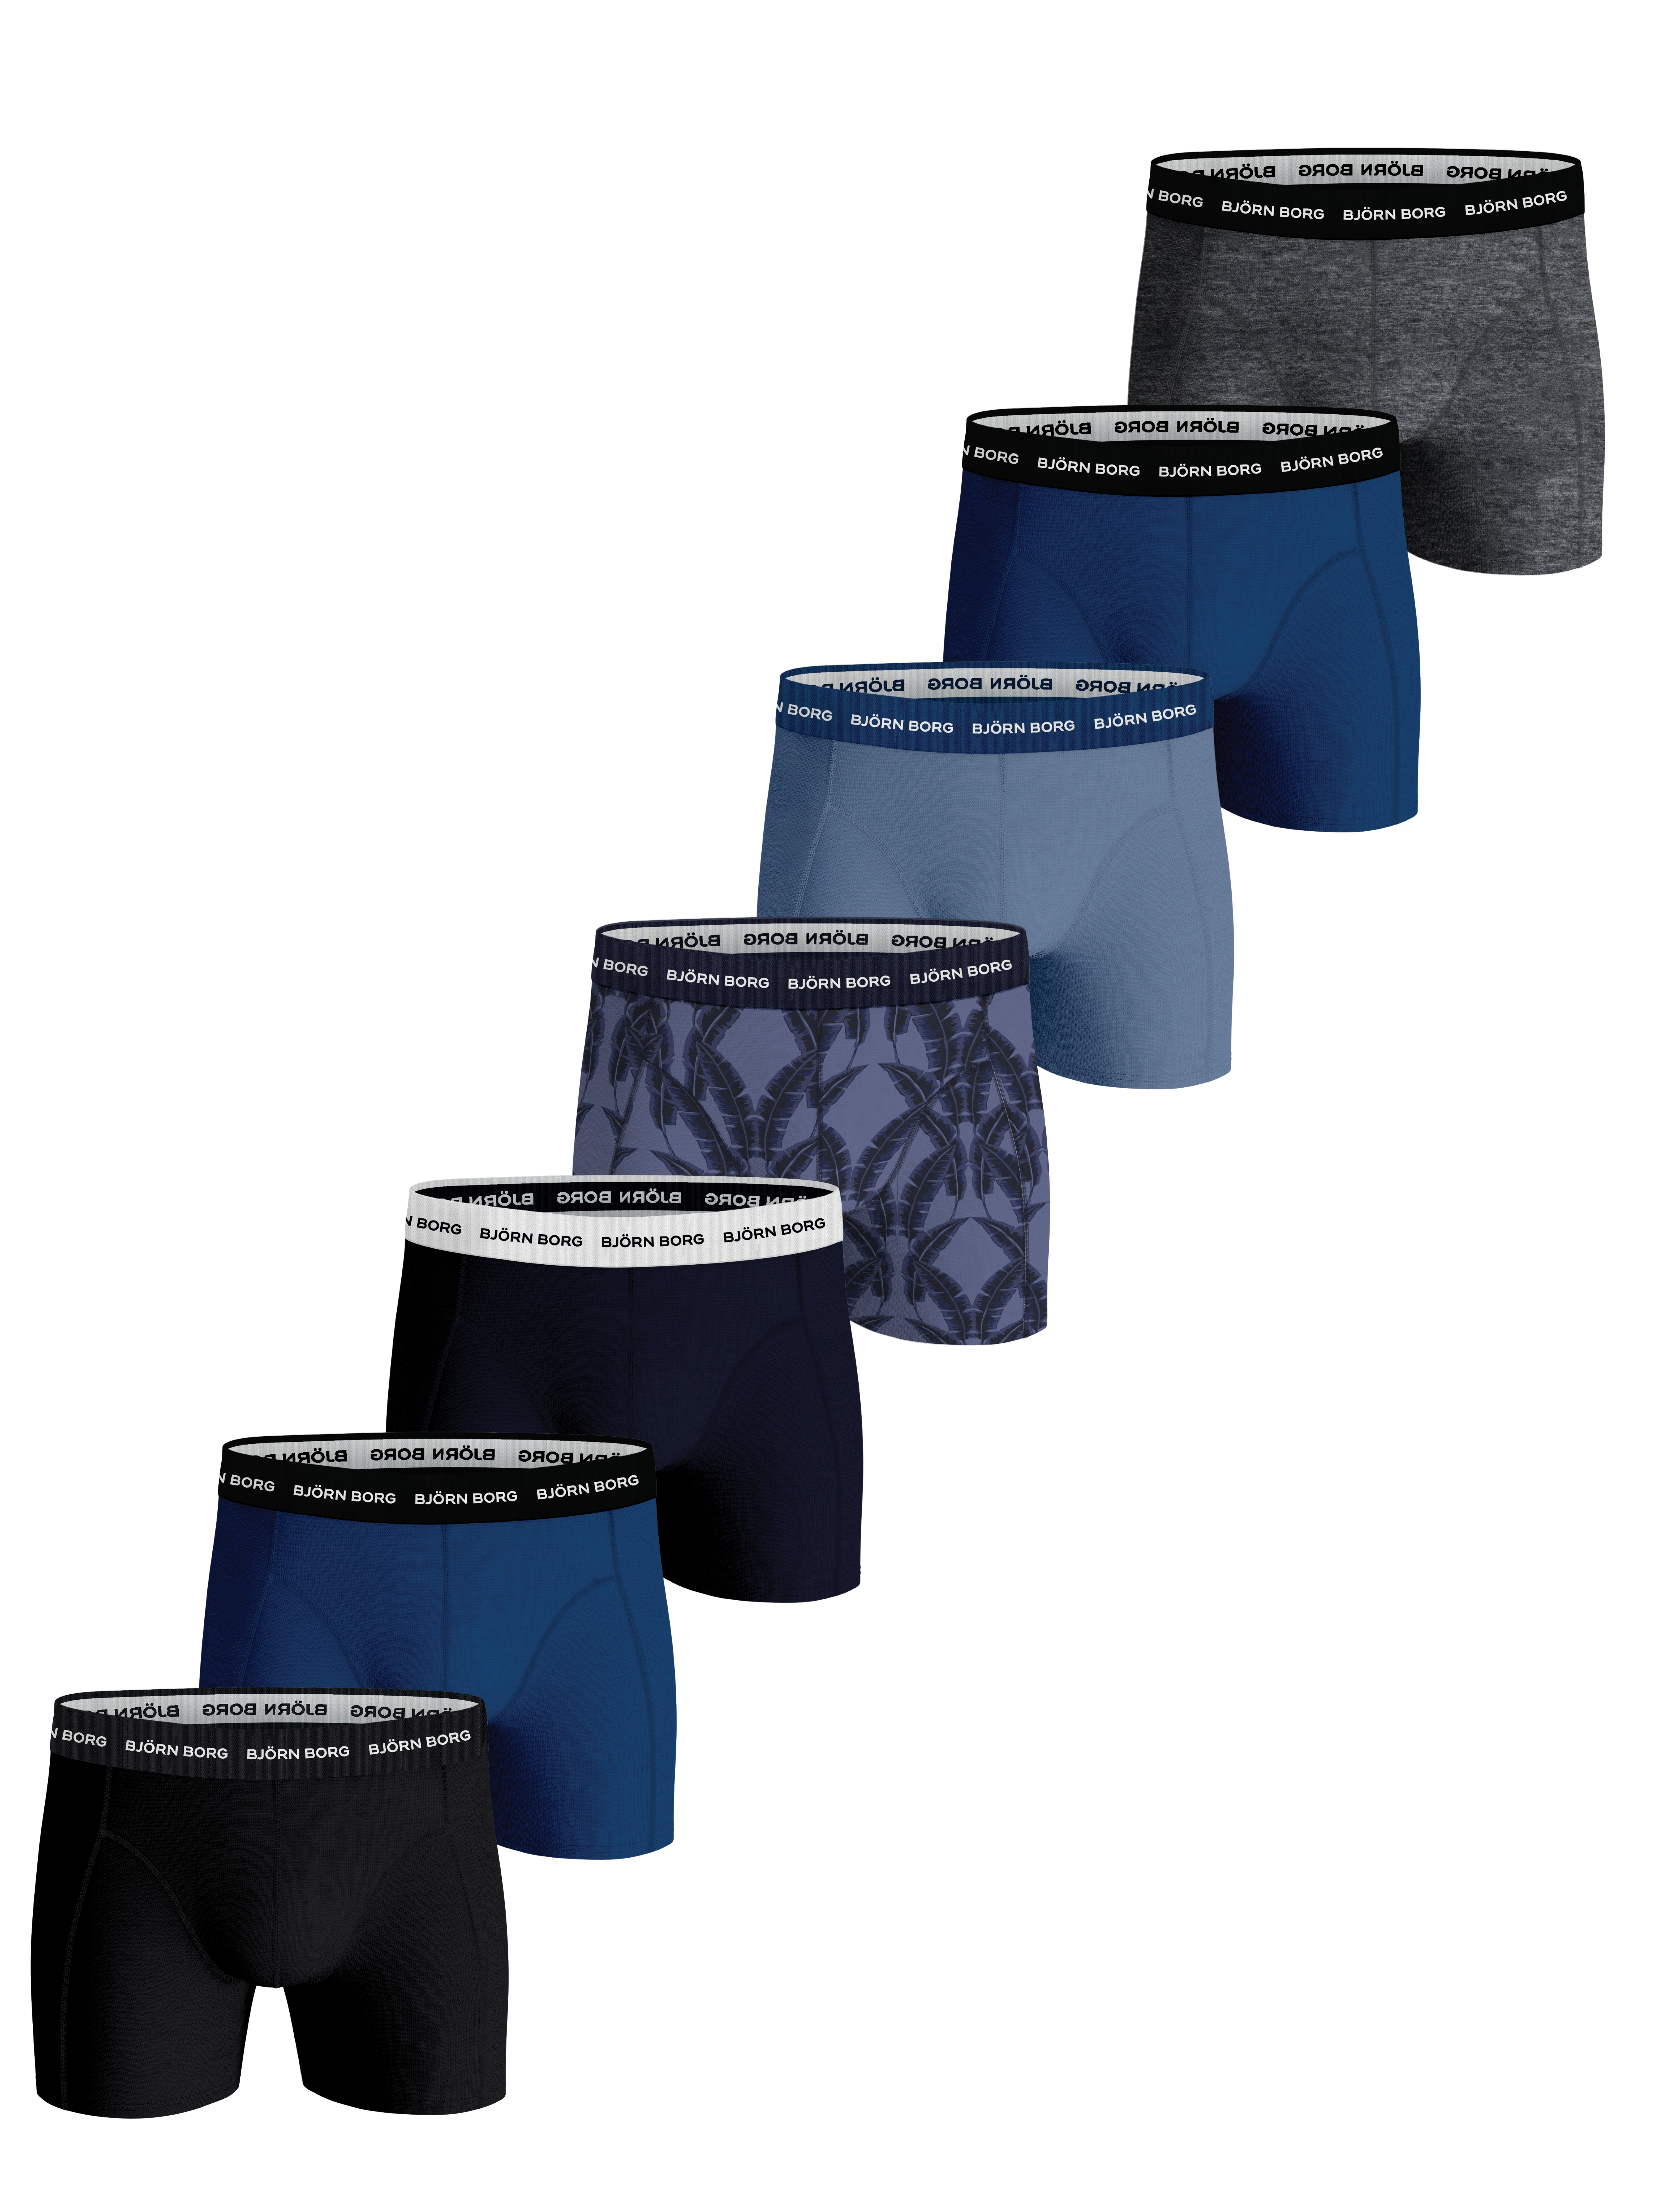 Björn Borg Men's Boxer Shorts 5er Pack Pants Cotton Stretch Logo  Waistband S-2XL | eBay